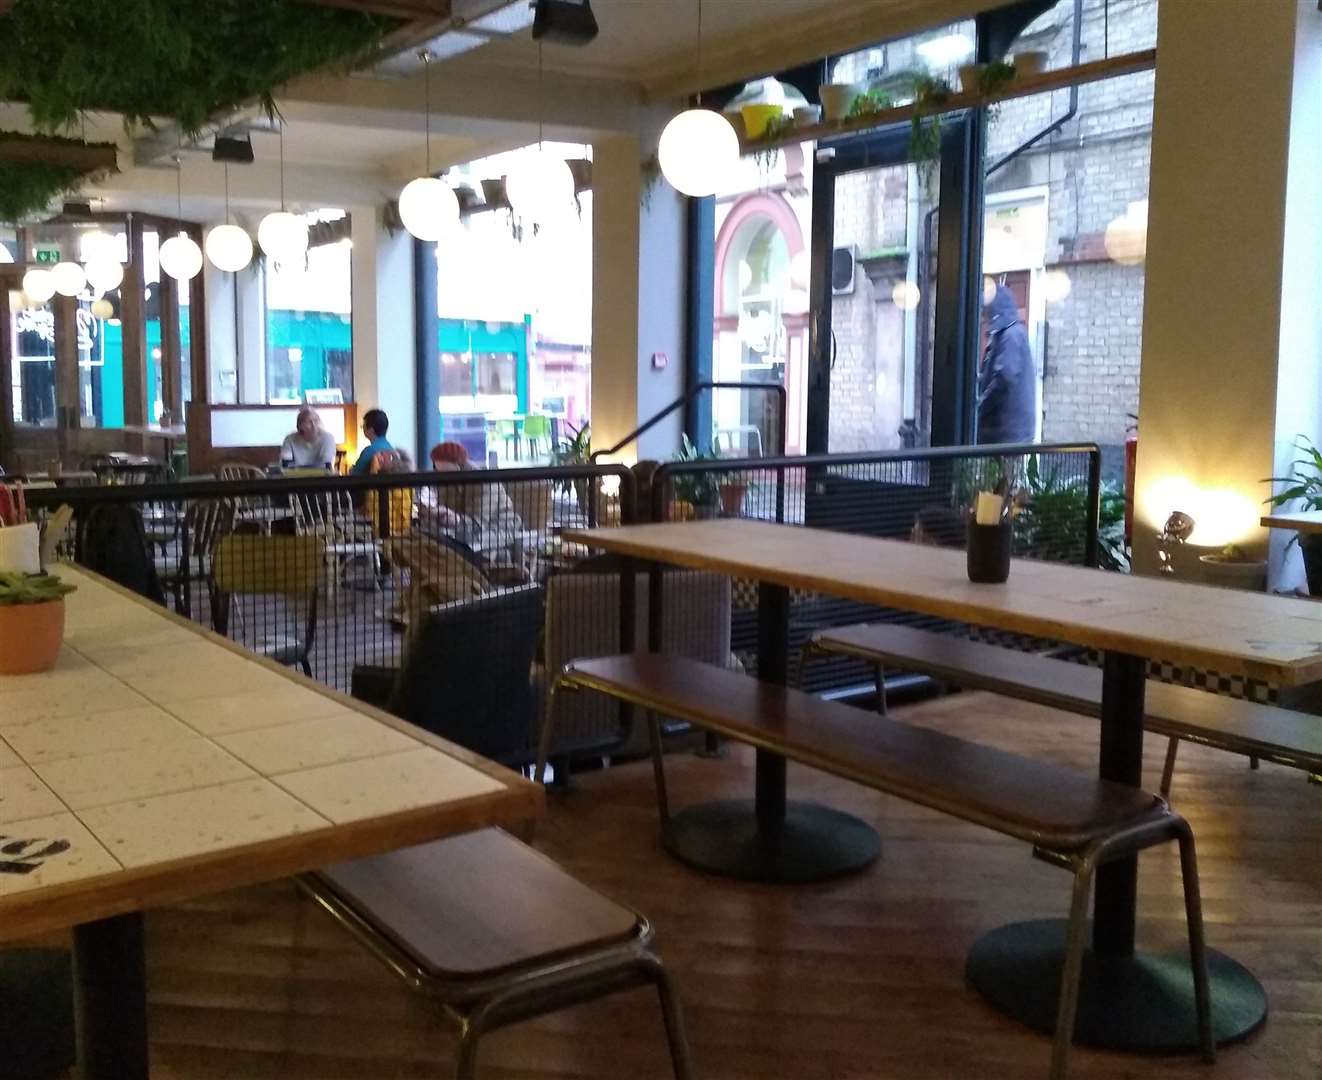 The restaurant opened last year